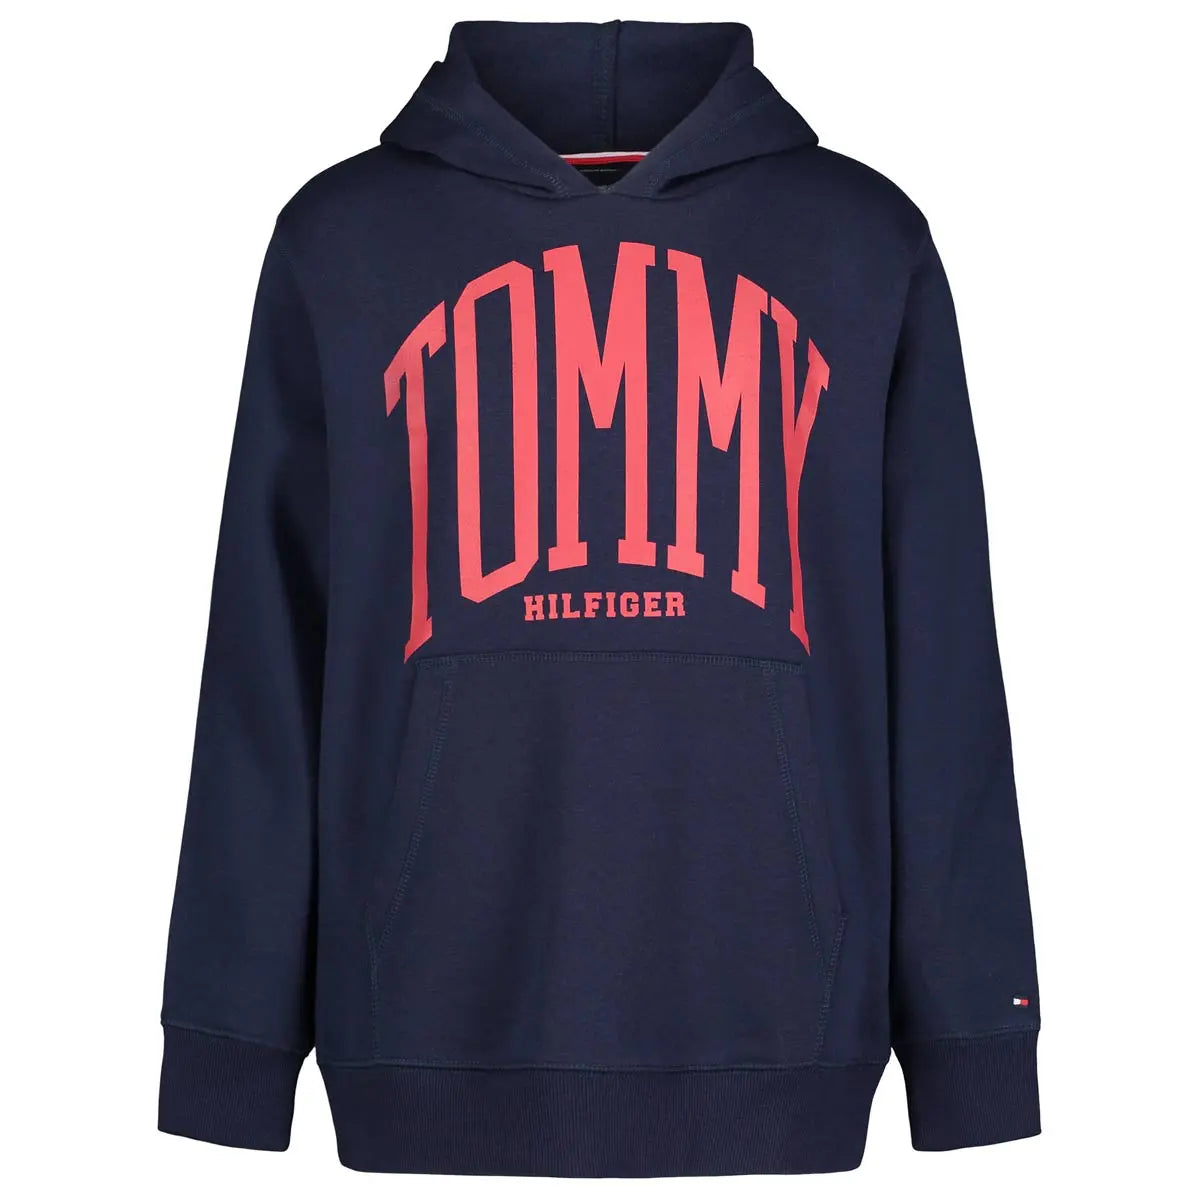 PROOZY Hilfiger Hoodie Pullover – Boy\'s Tommy Big